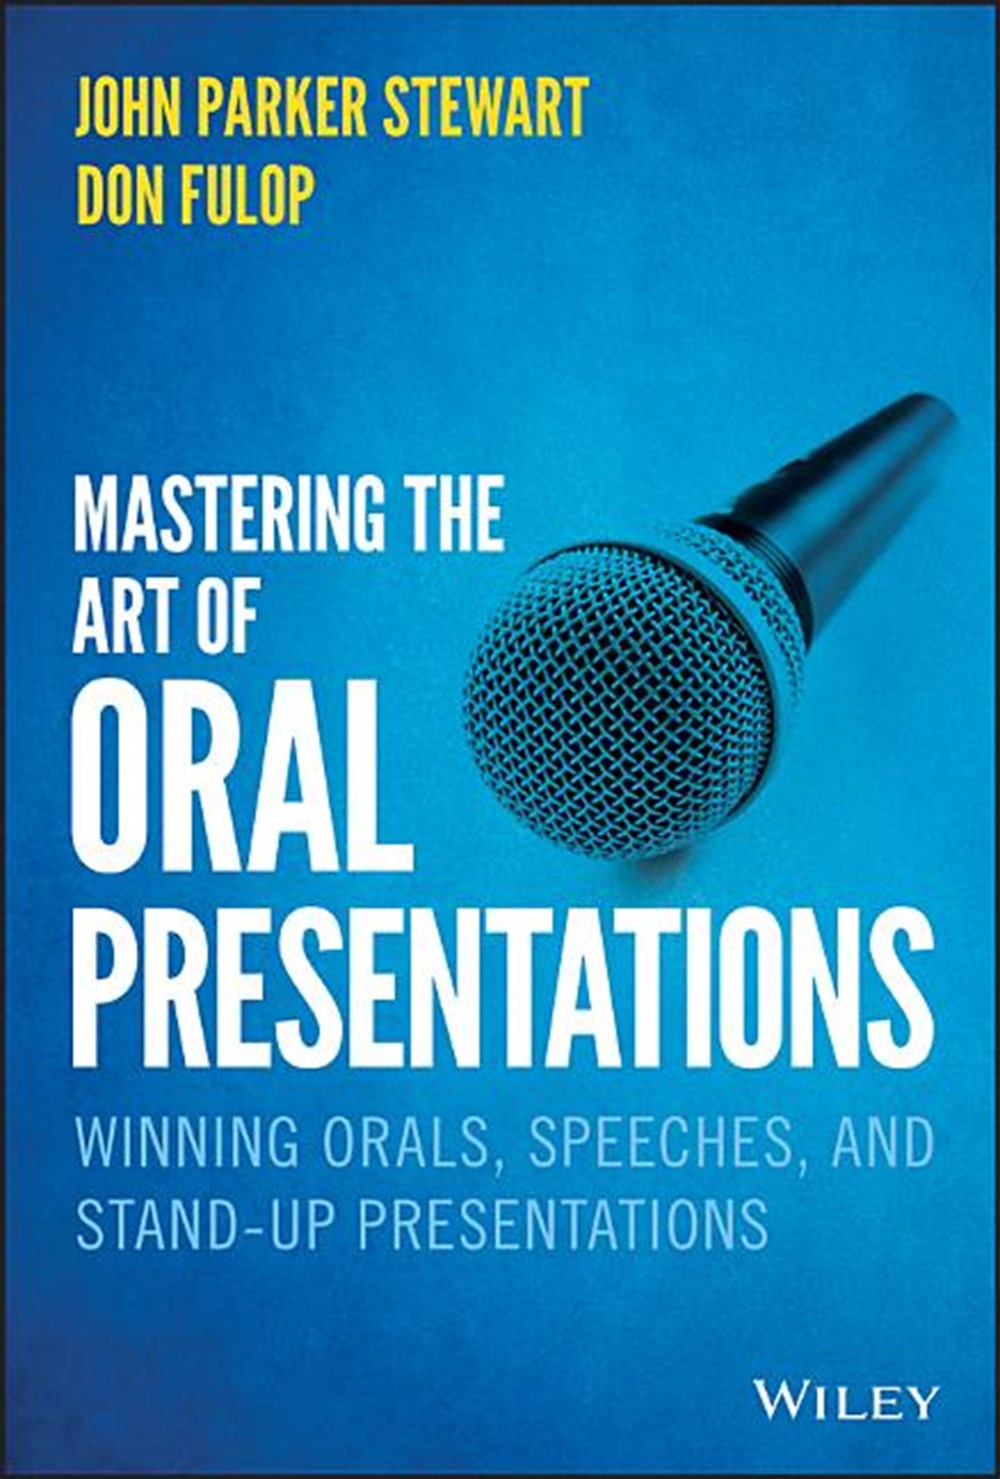 oral presentation on a book